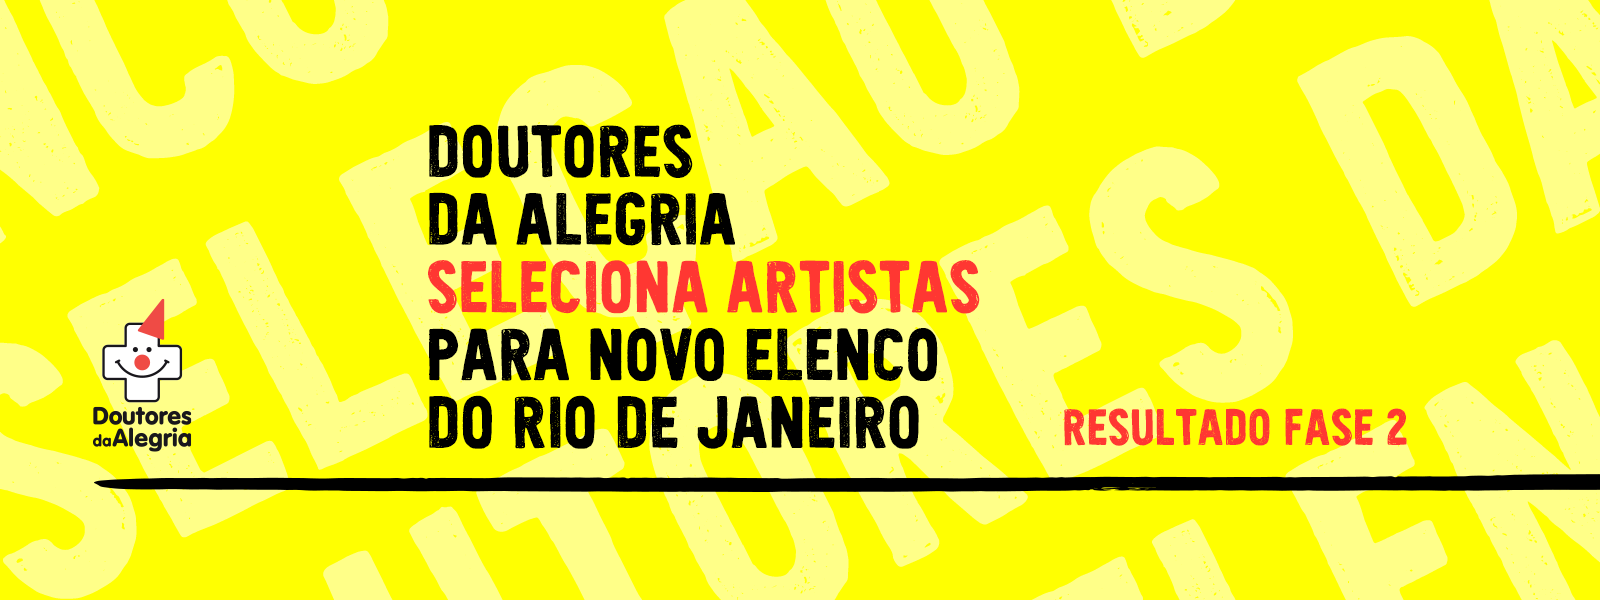 Doutores da Alegria anuncia artistas selecionados para etapa final no Rio de Janeiro